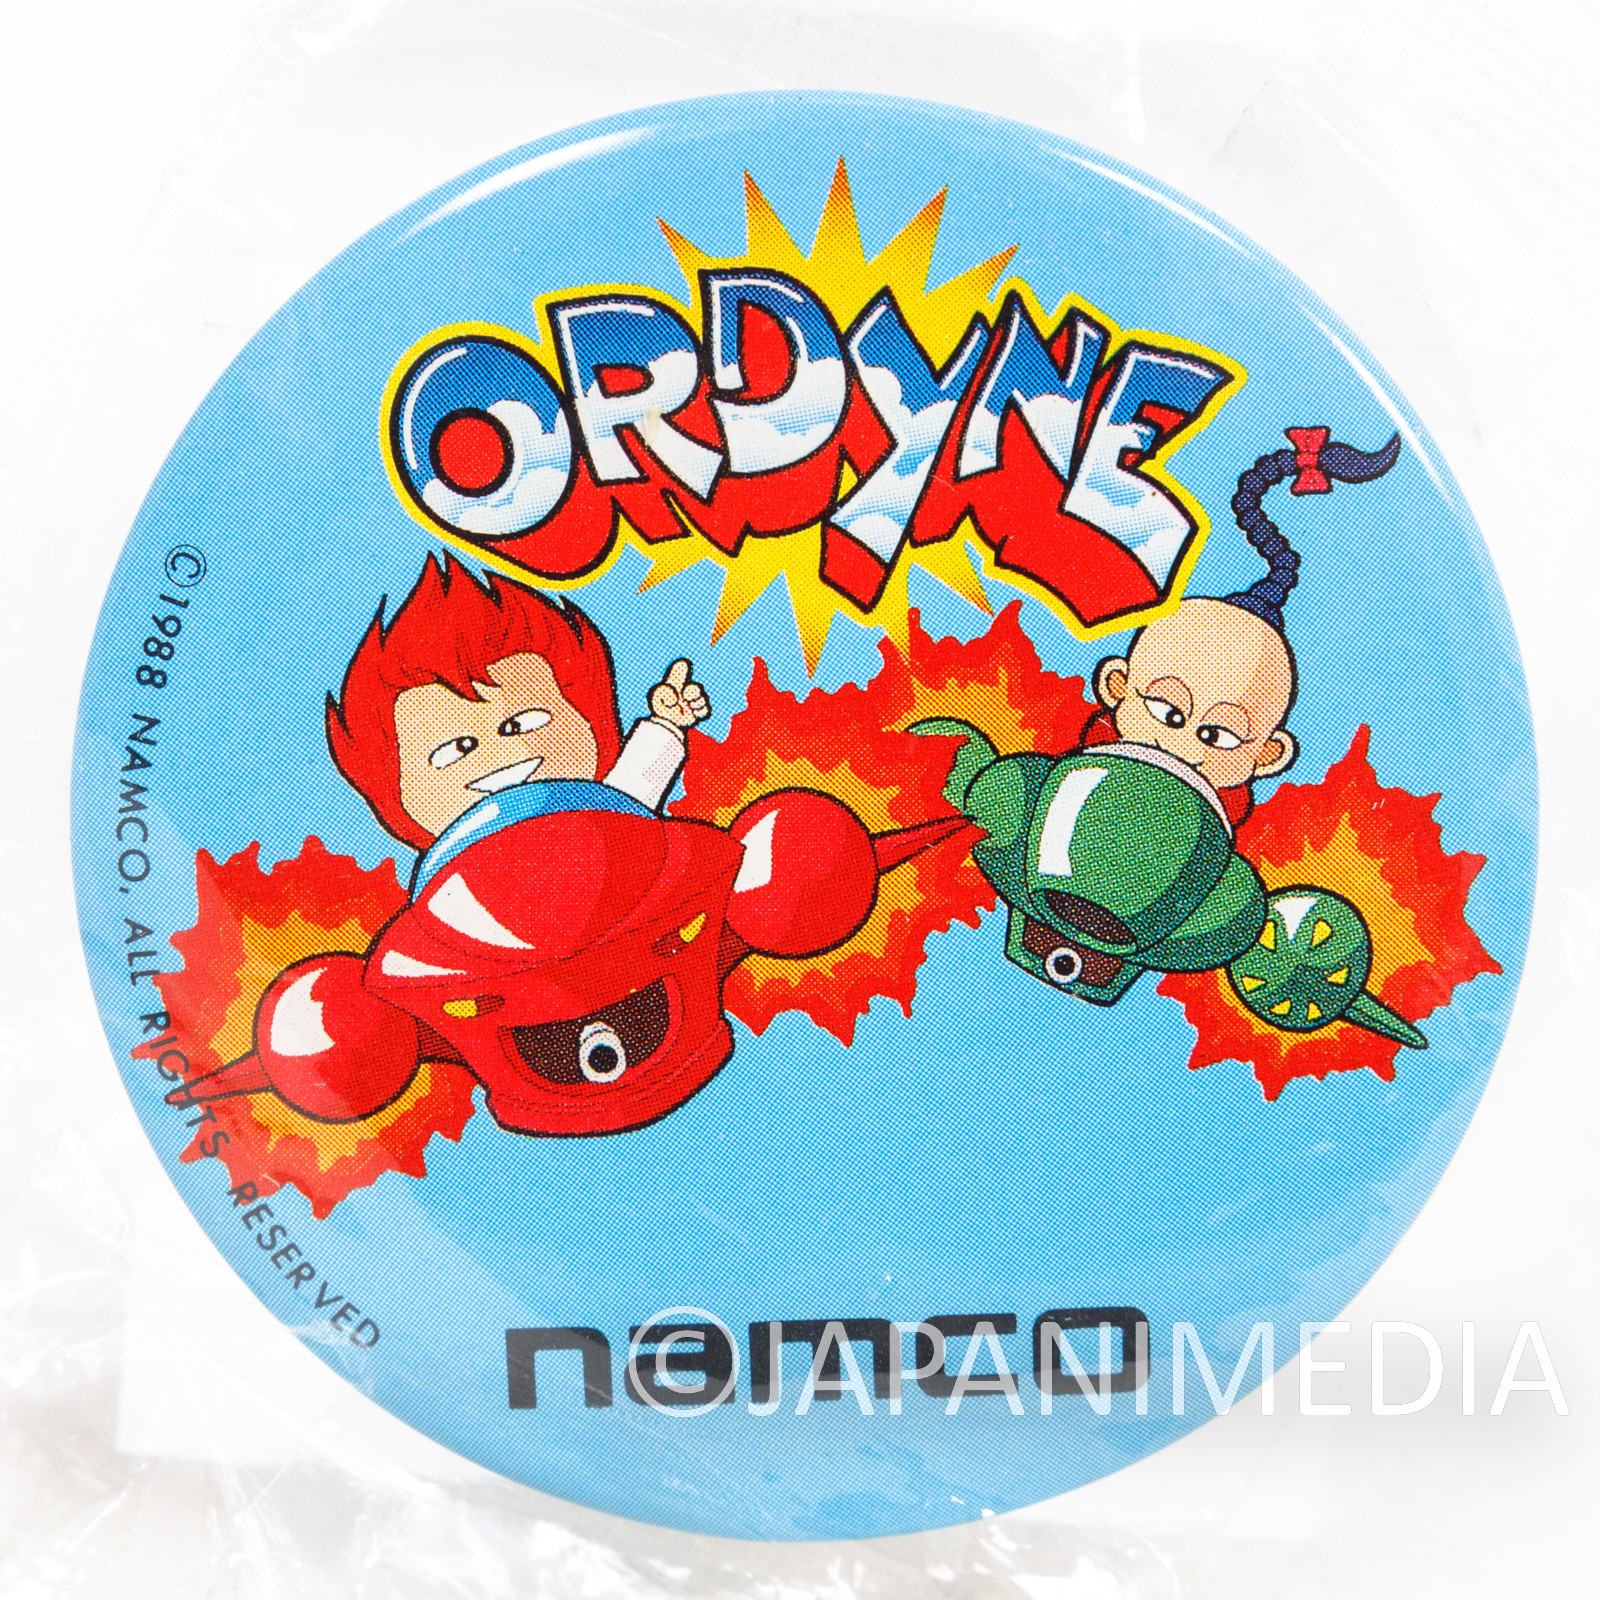 Ordyne Dr. Yuichiro Tomari & Sunday Chin Can Badge Pins Namco JAPAN PC ENGINE